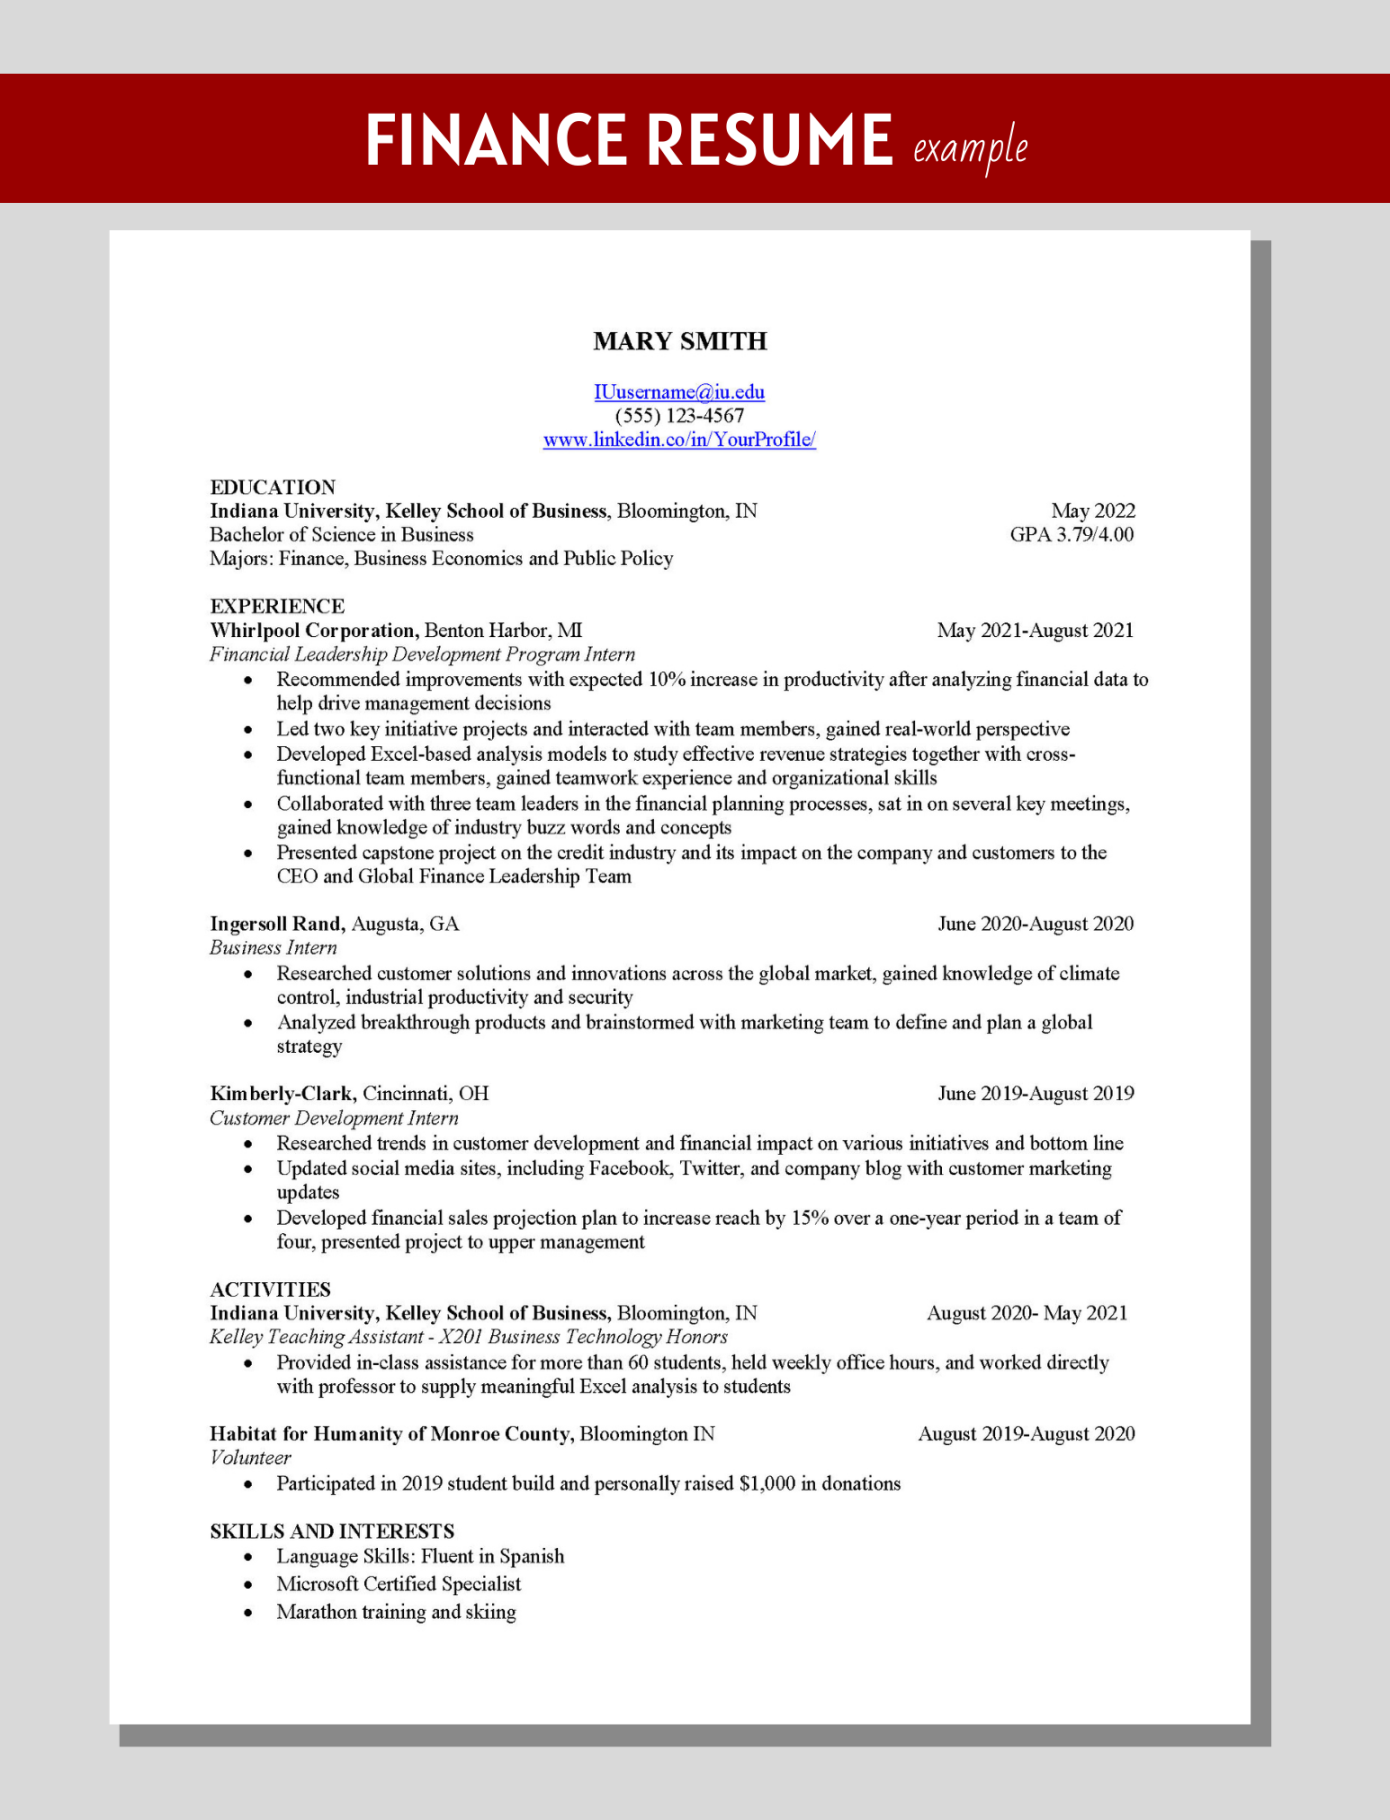 Finance Resume Example – KelleyConnect  Kelley School of Business